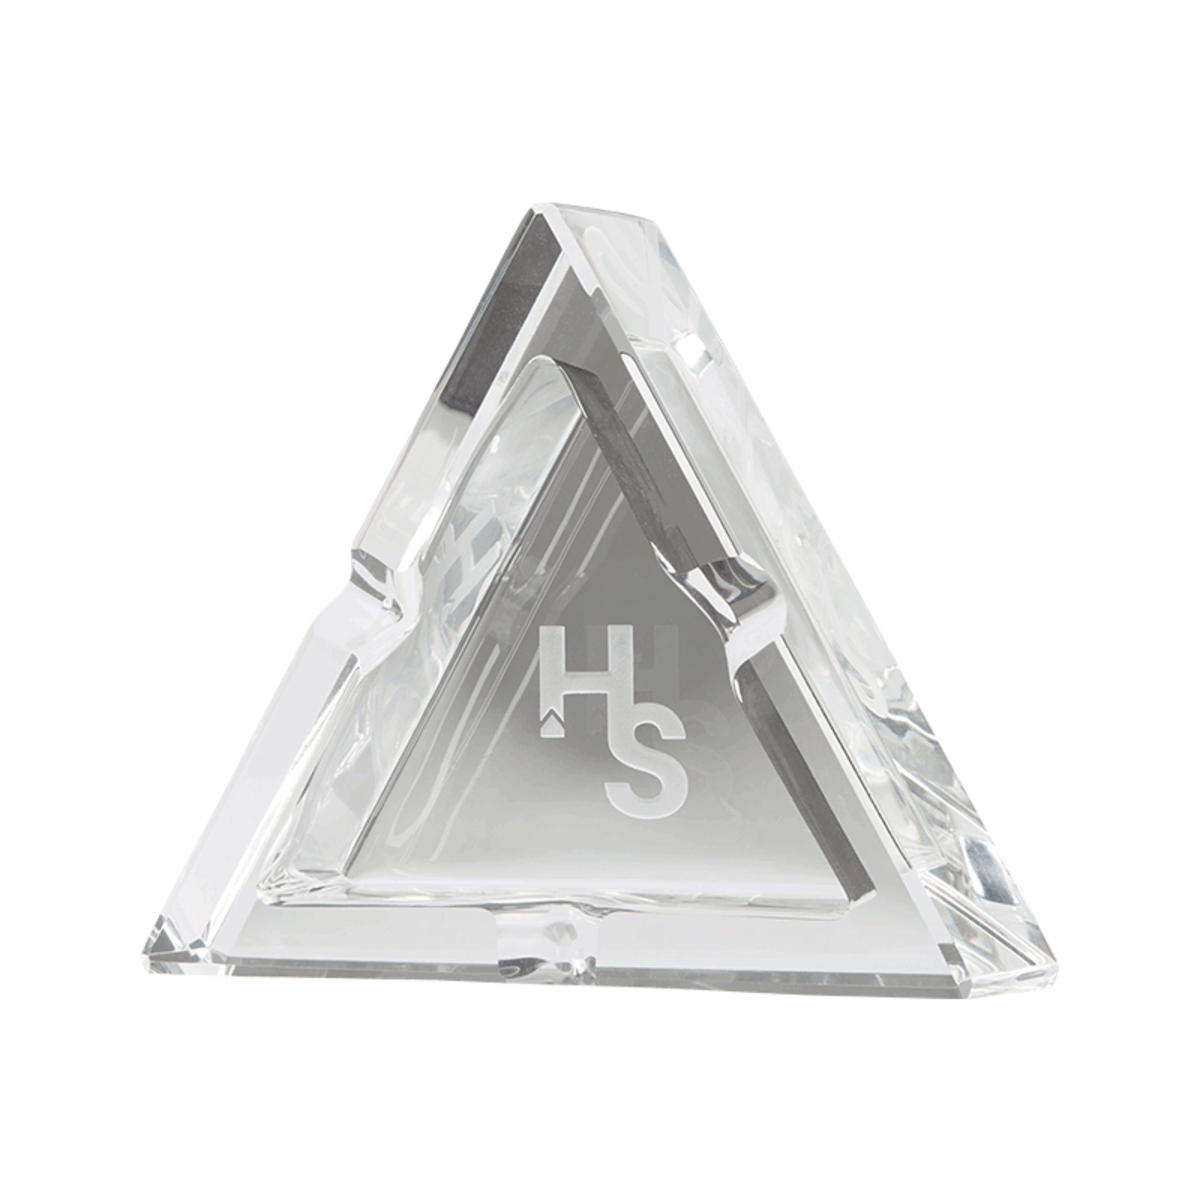 higher standards crystal ashtray premium